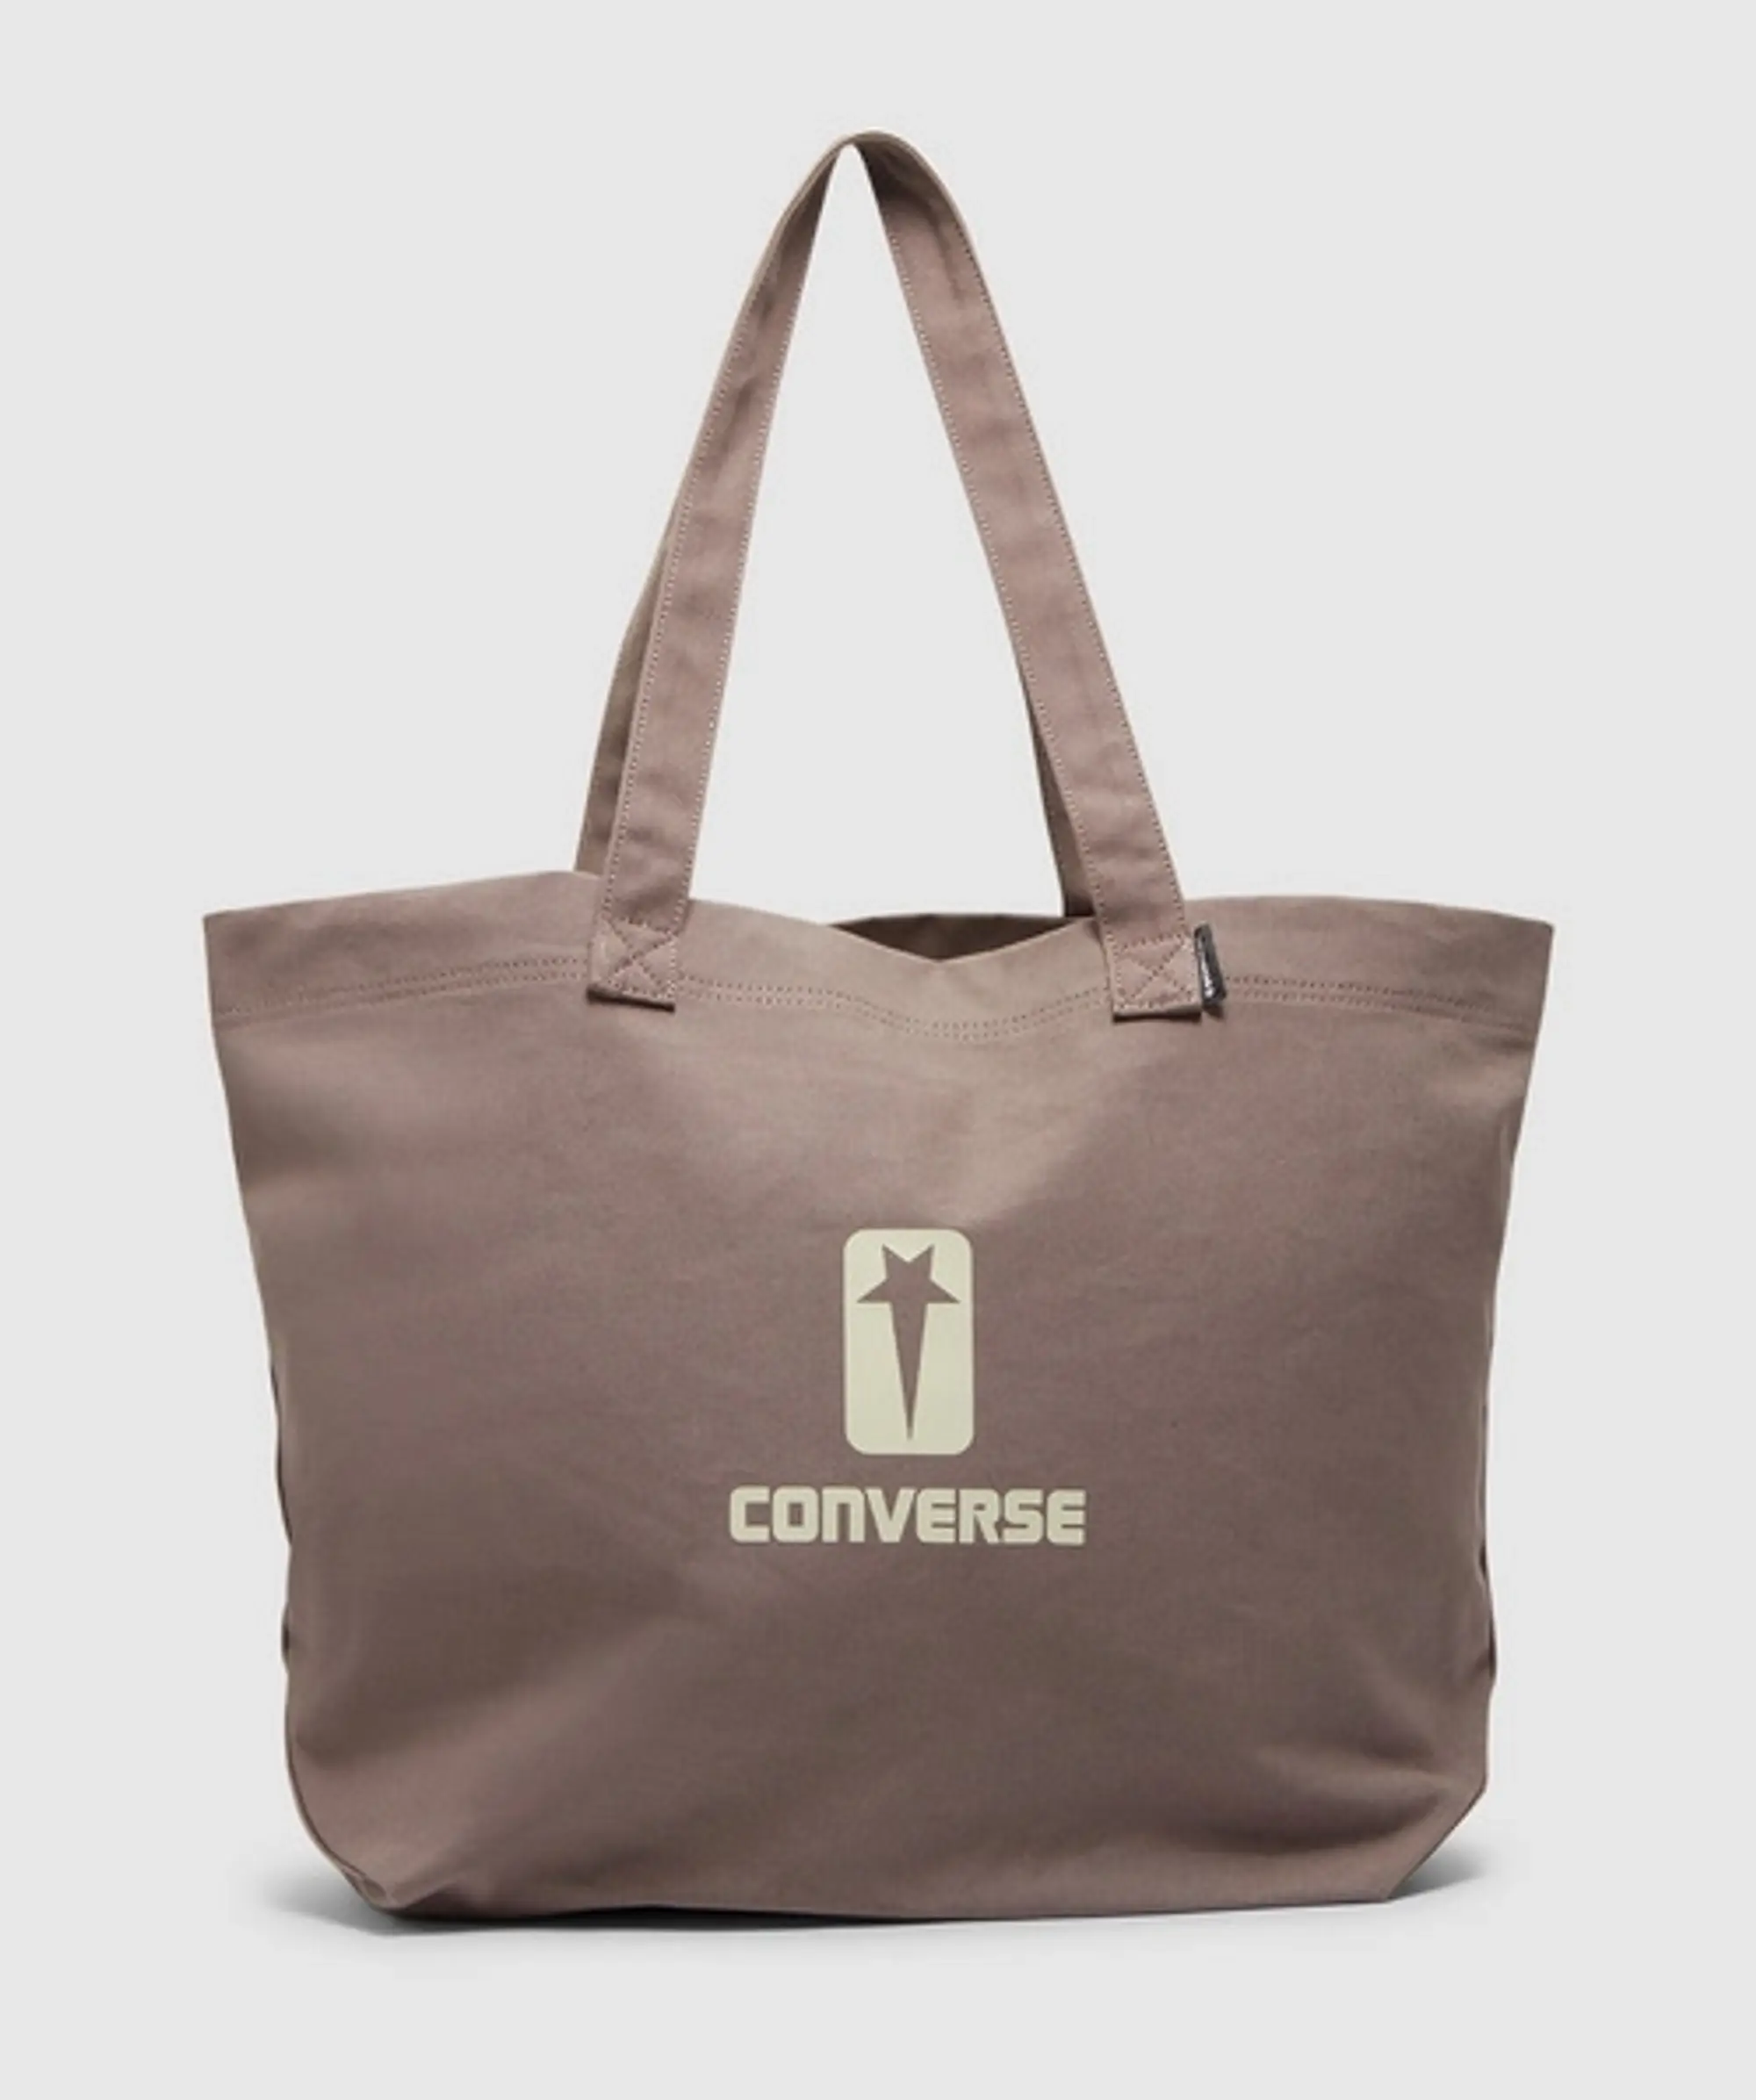 X Converse Drkshdow Tote Bag